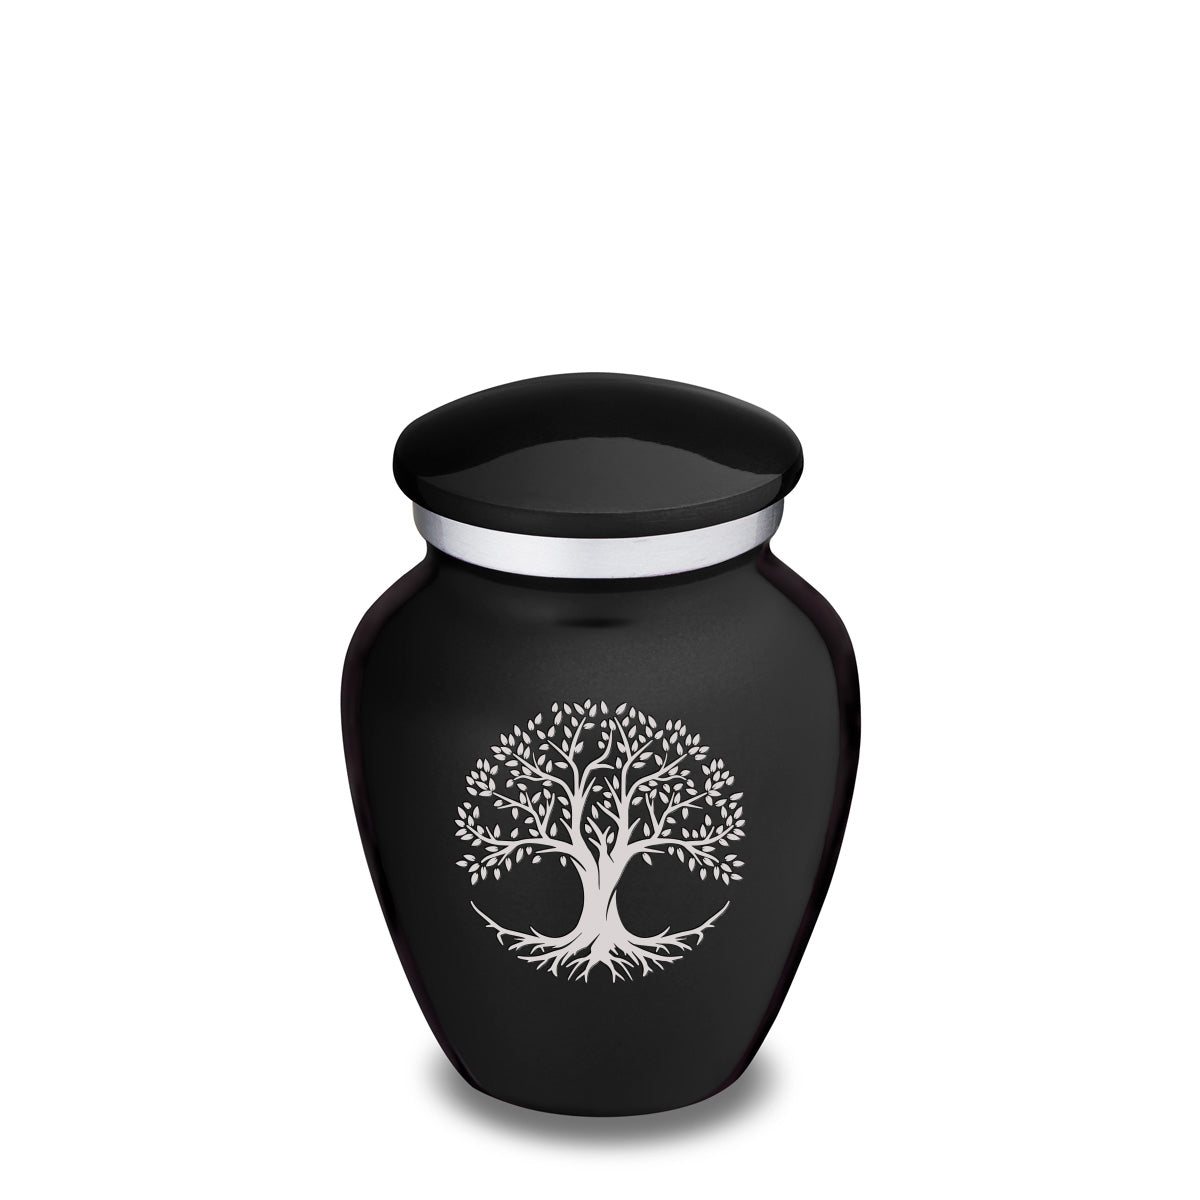 Keepsake Embrace Black Tree of Life Cremation Urn